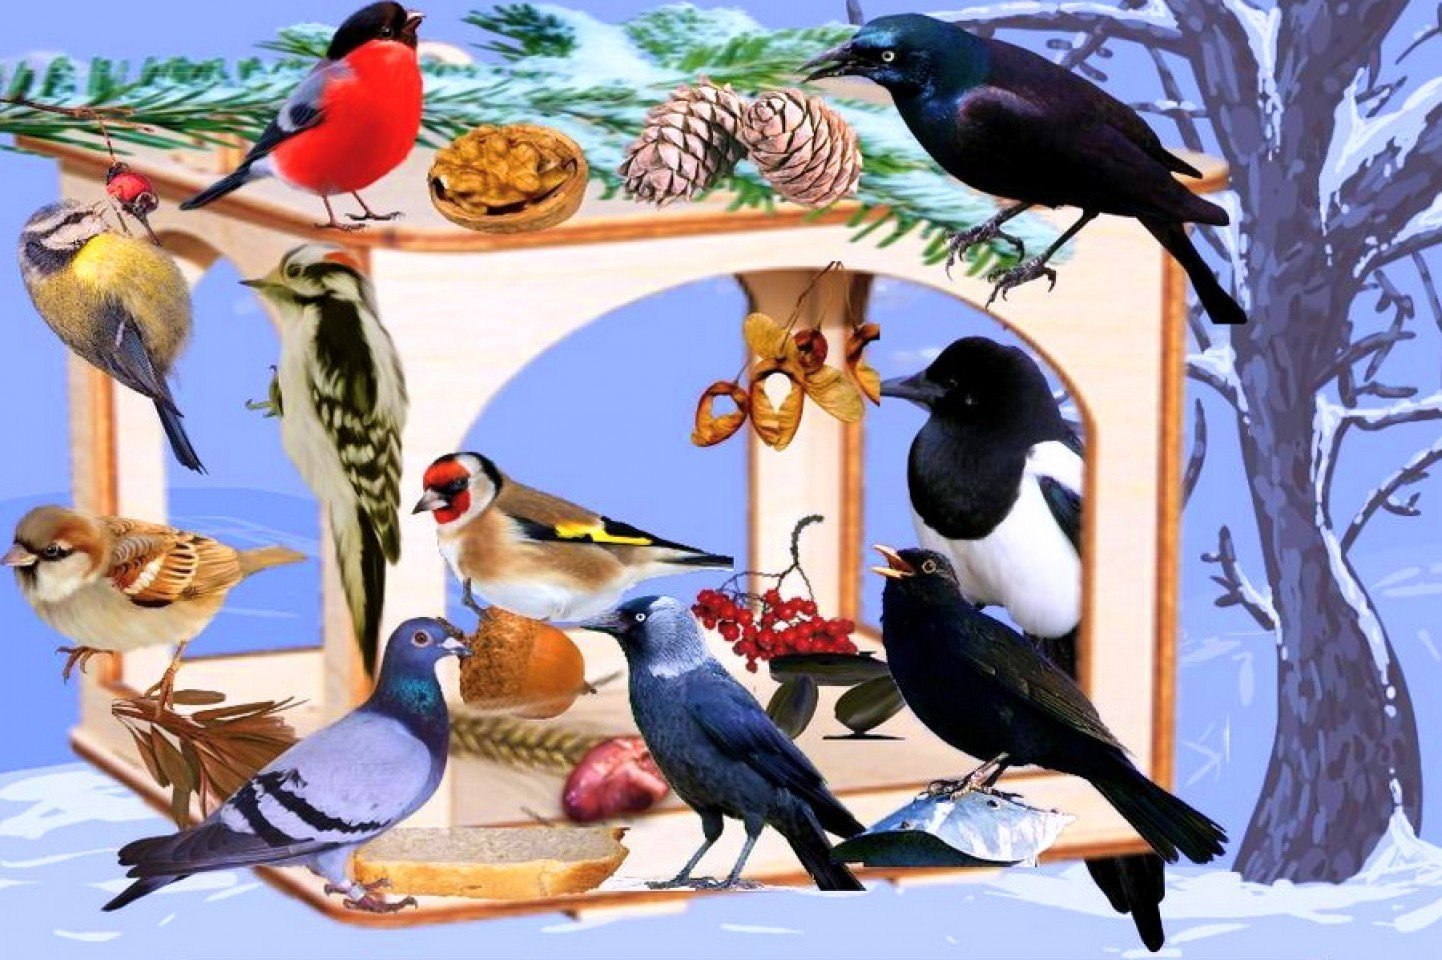 Тема недели птицы весной. Зимующие птицы. Зимующие птицы для детей. Зимующие птицы на экокормушке. Картина с изображением зимующих птиц на кормушке.